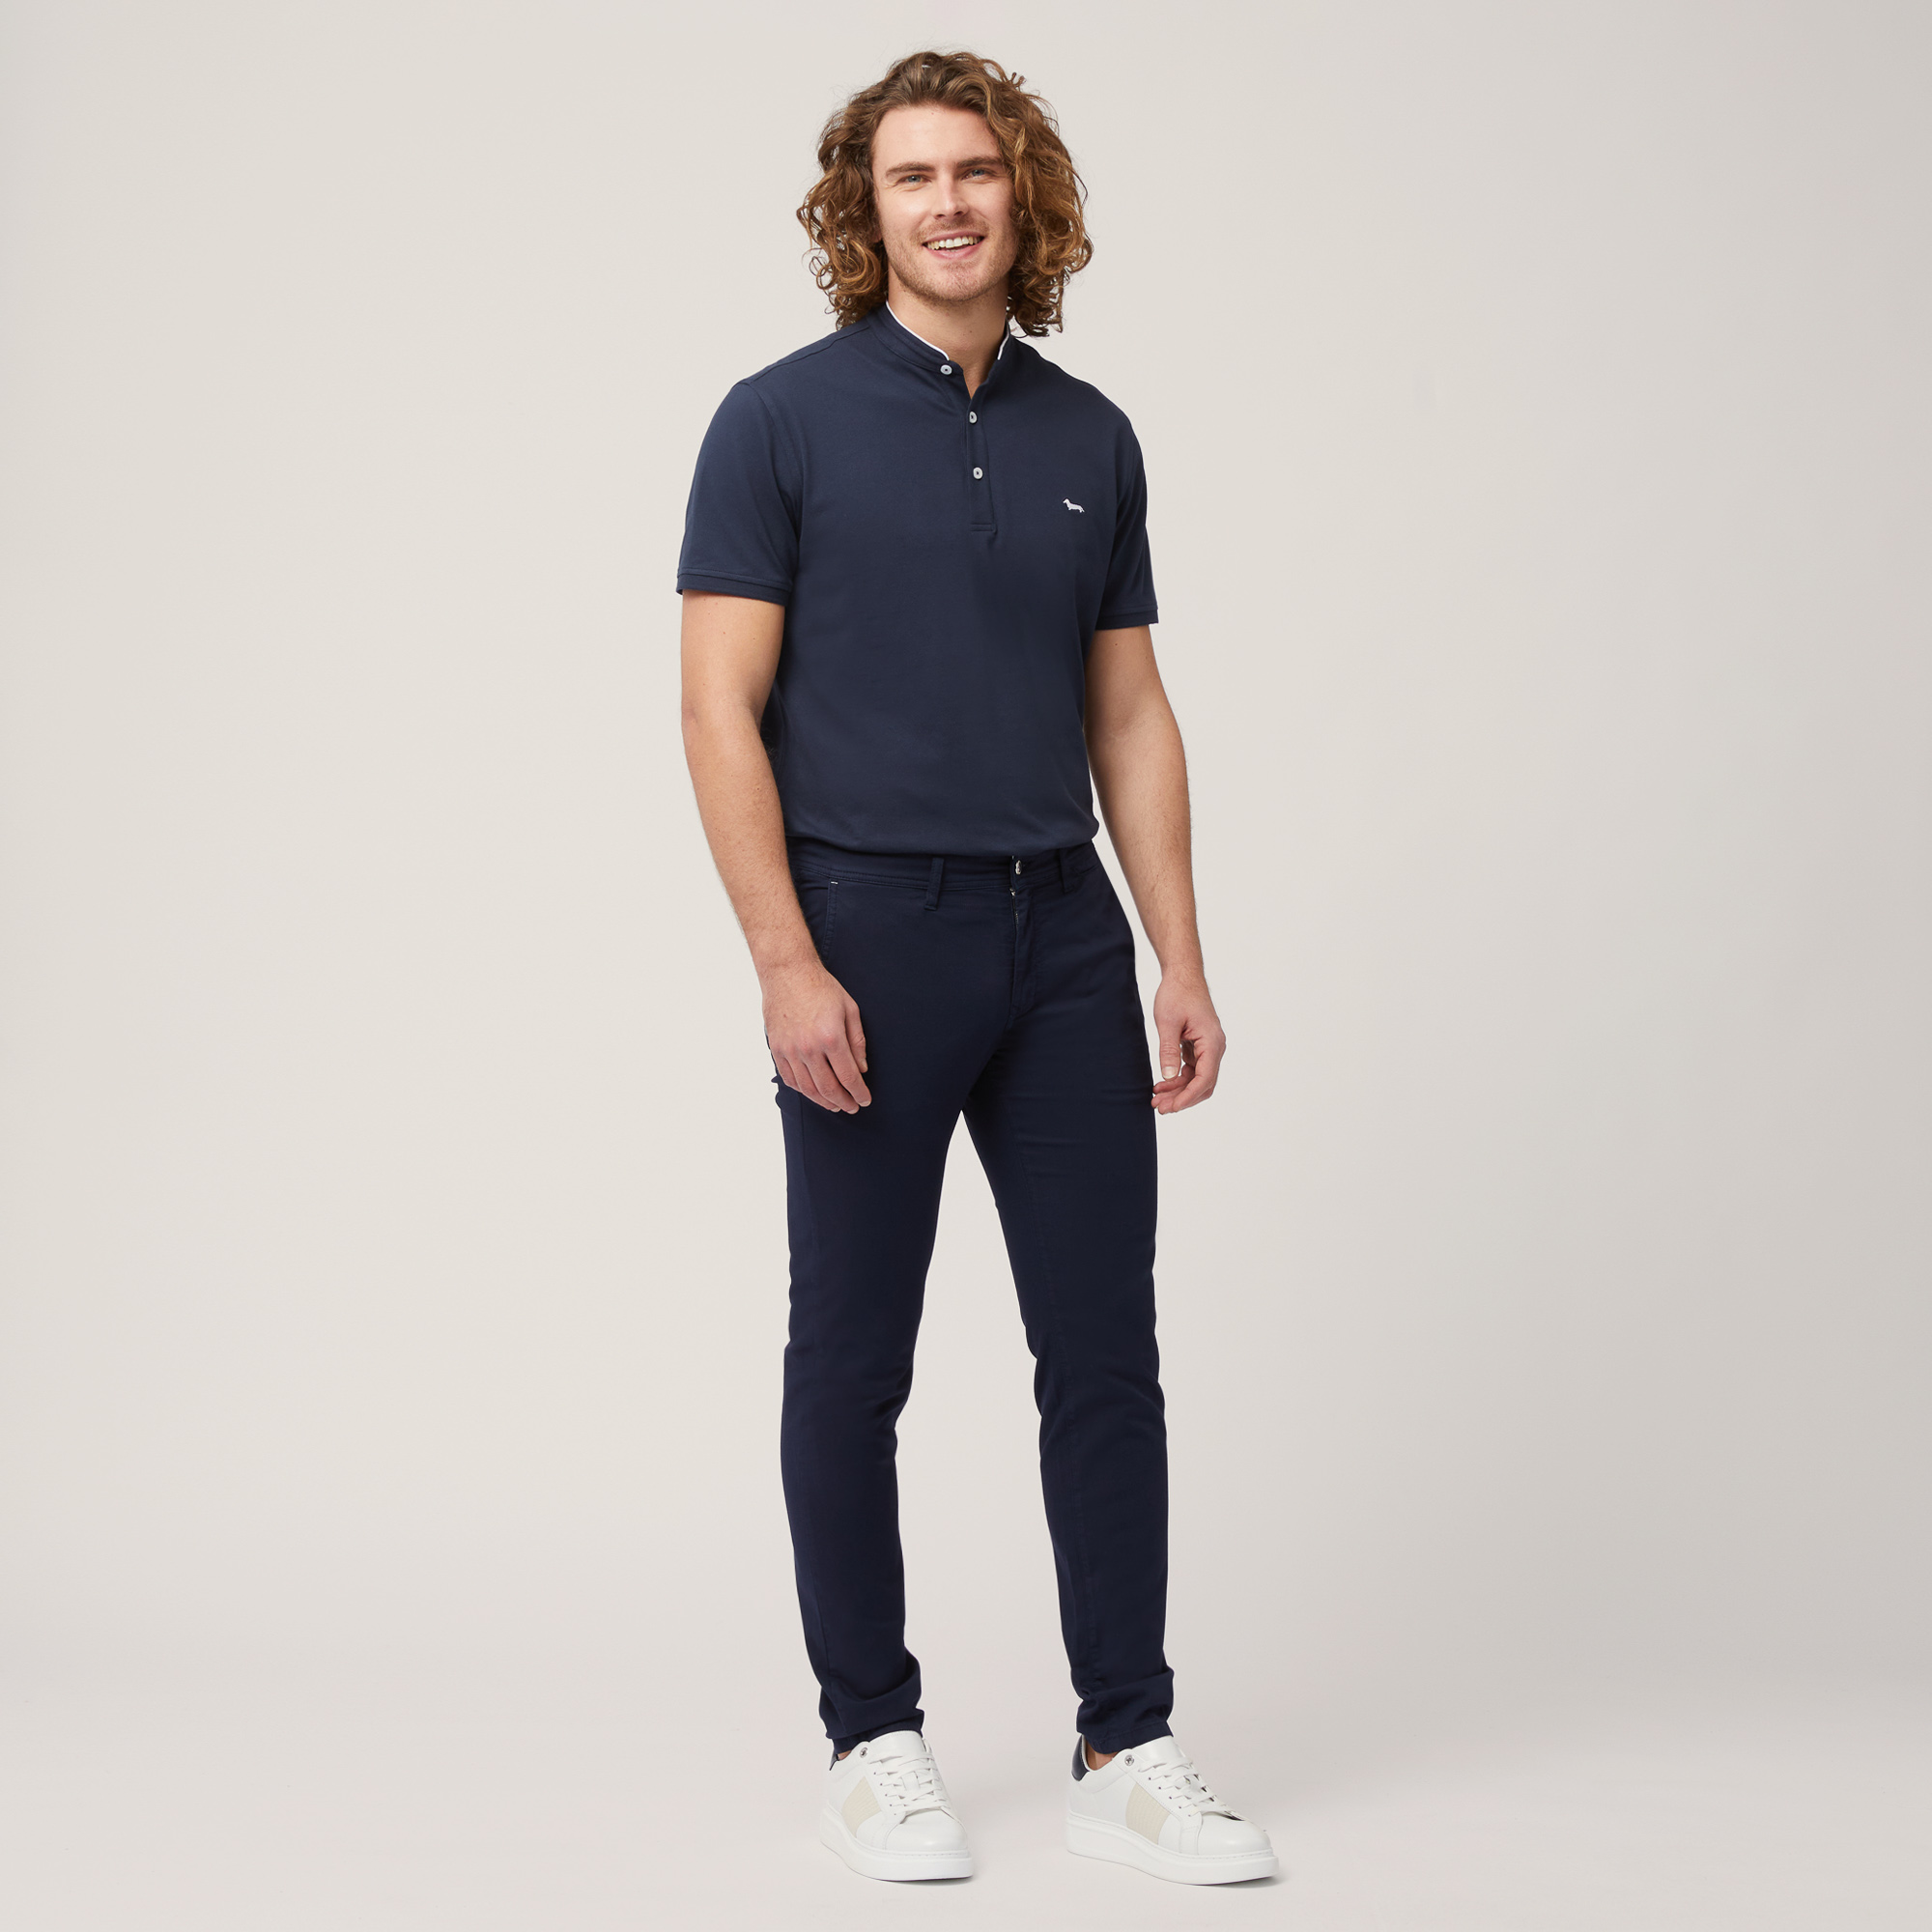 Pantaloni Colorfive, Blu Navy, large image number 3